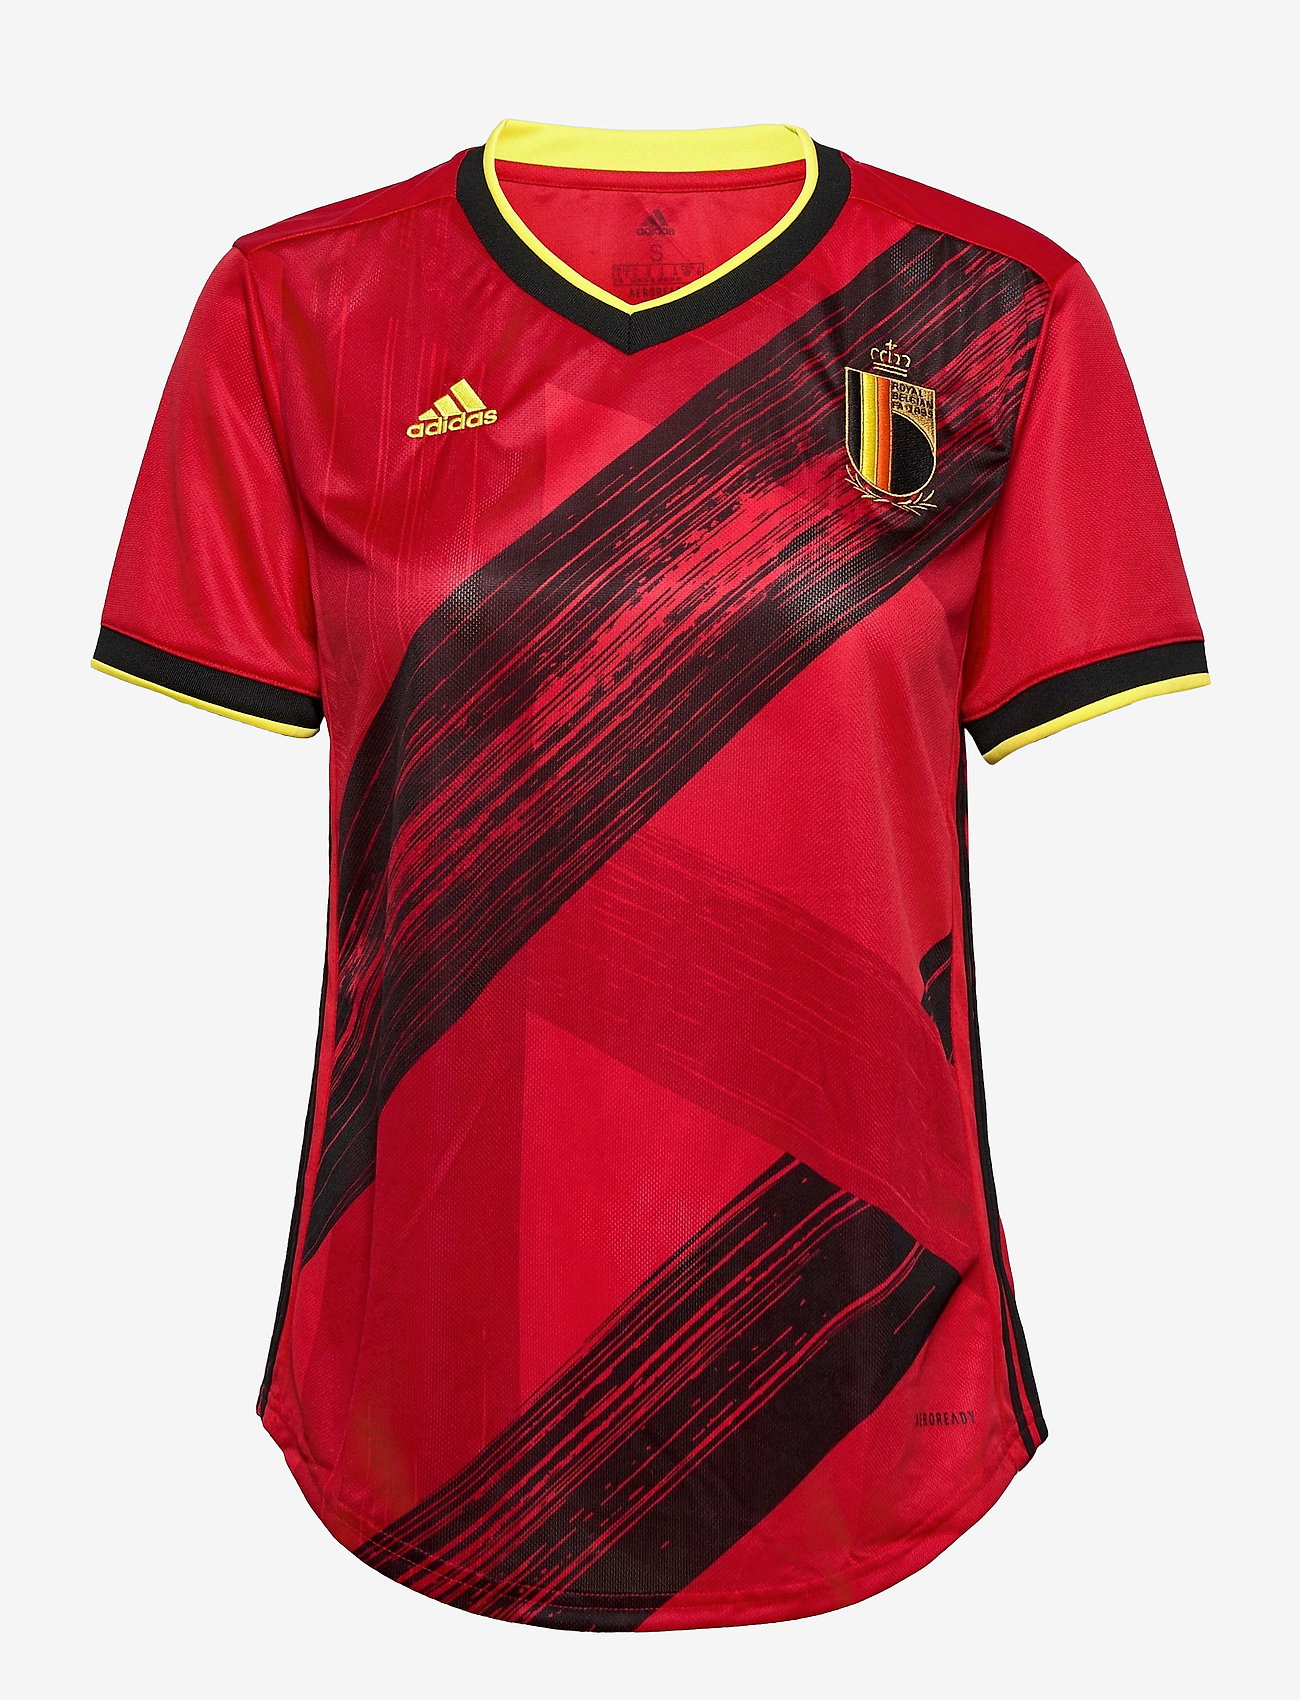 adidas Performance - Belgium 2020 Home Jersey W - koszulki piłkarskie - colred - 0